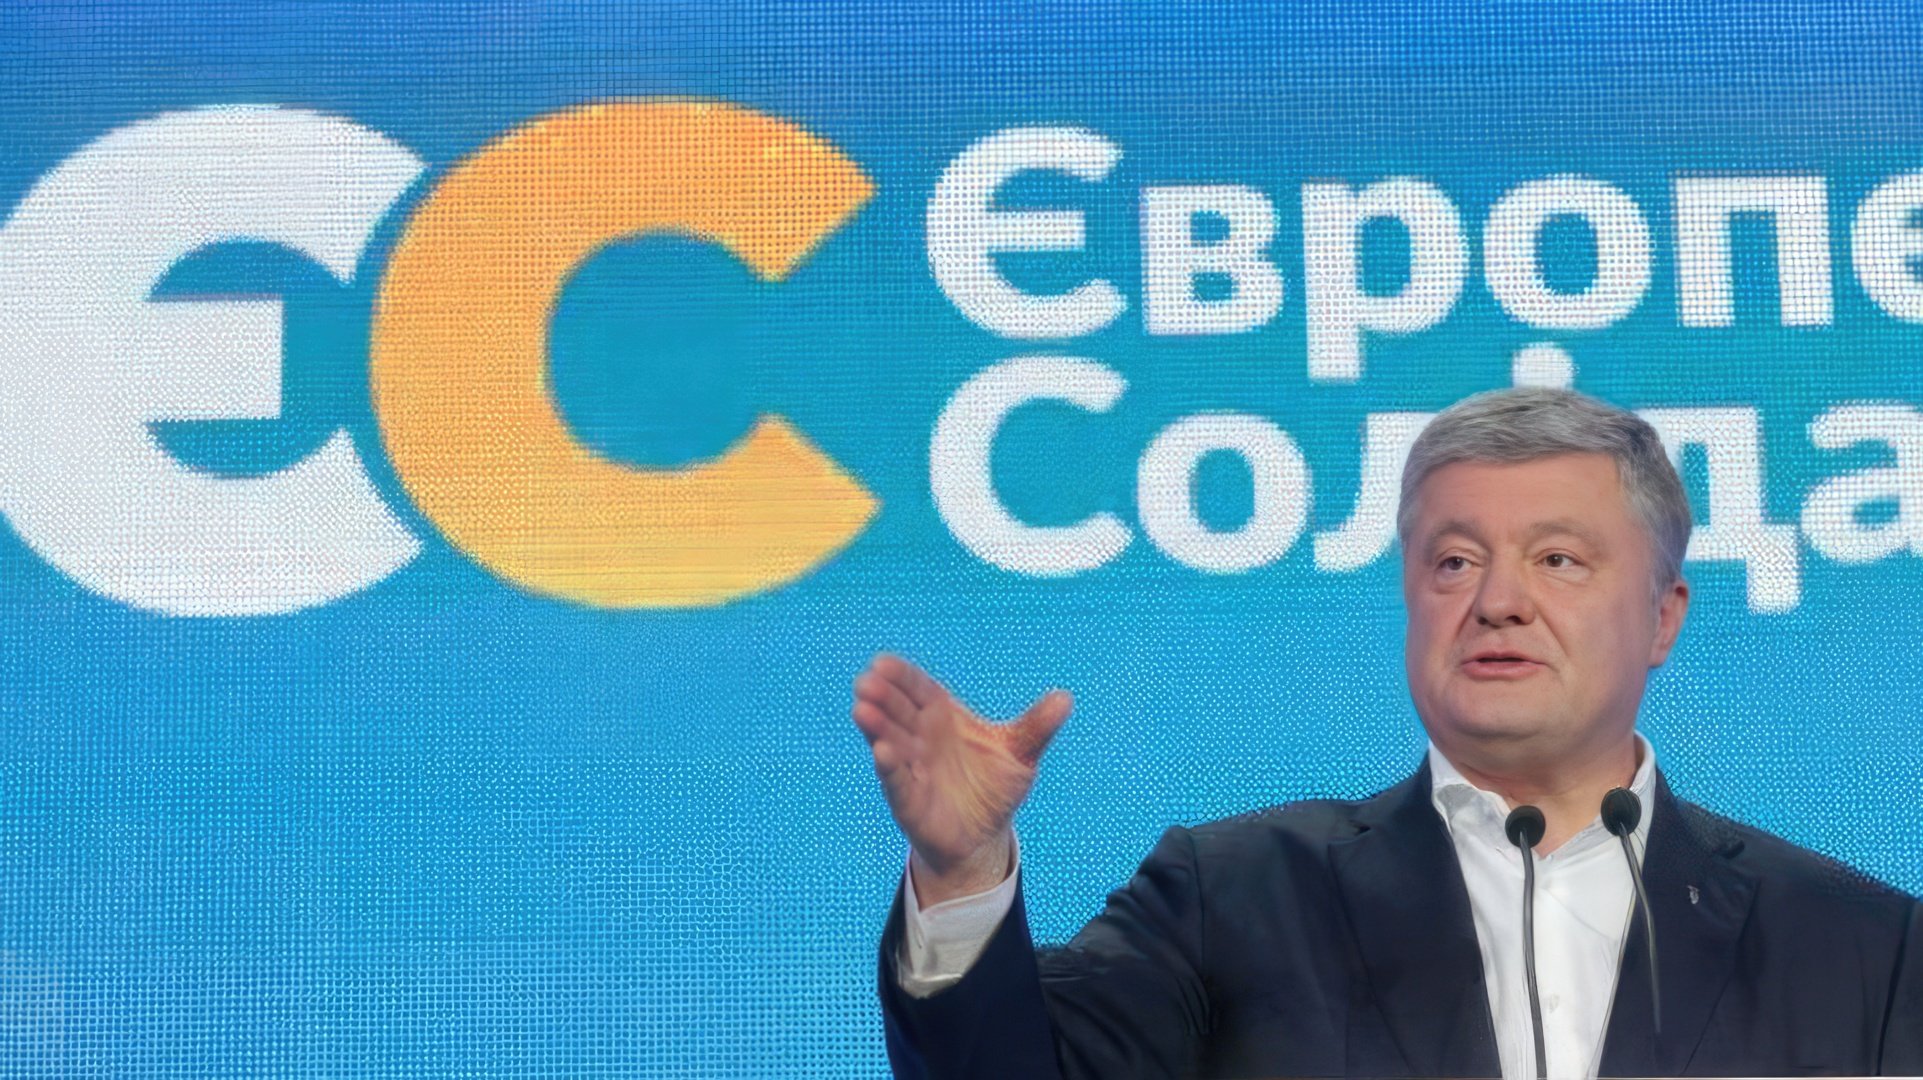 European Solidarity is Poroshenko’s party